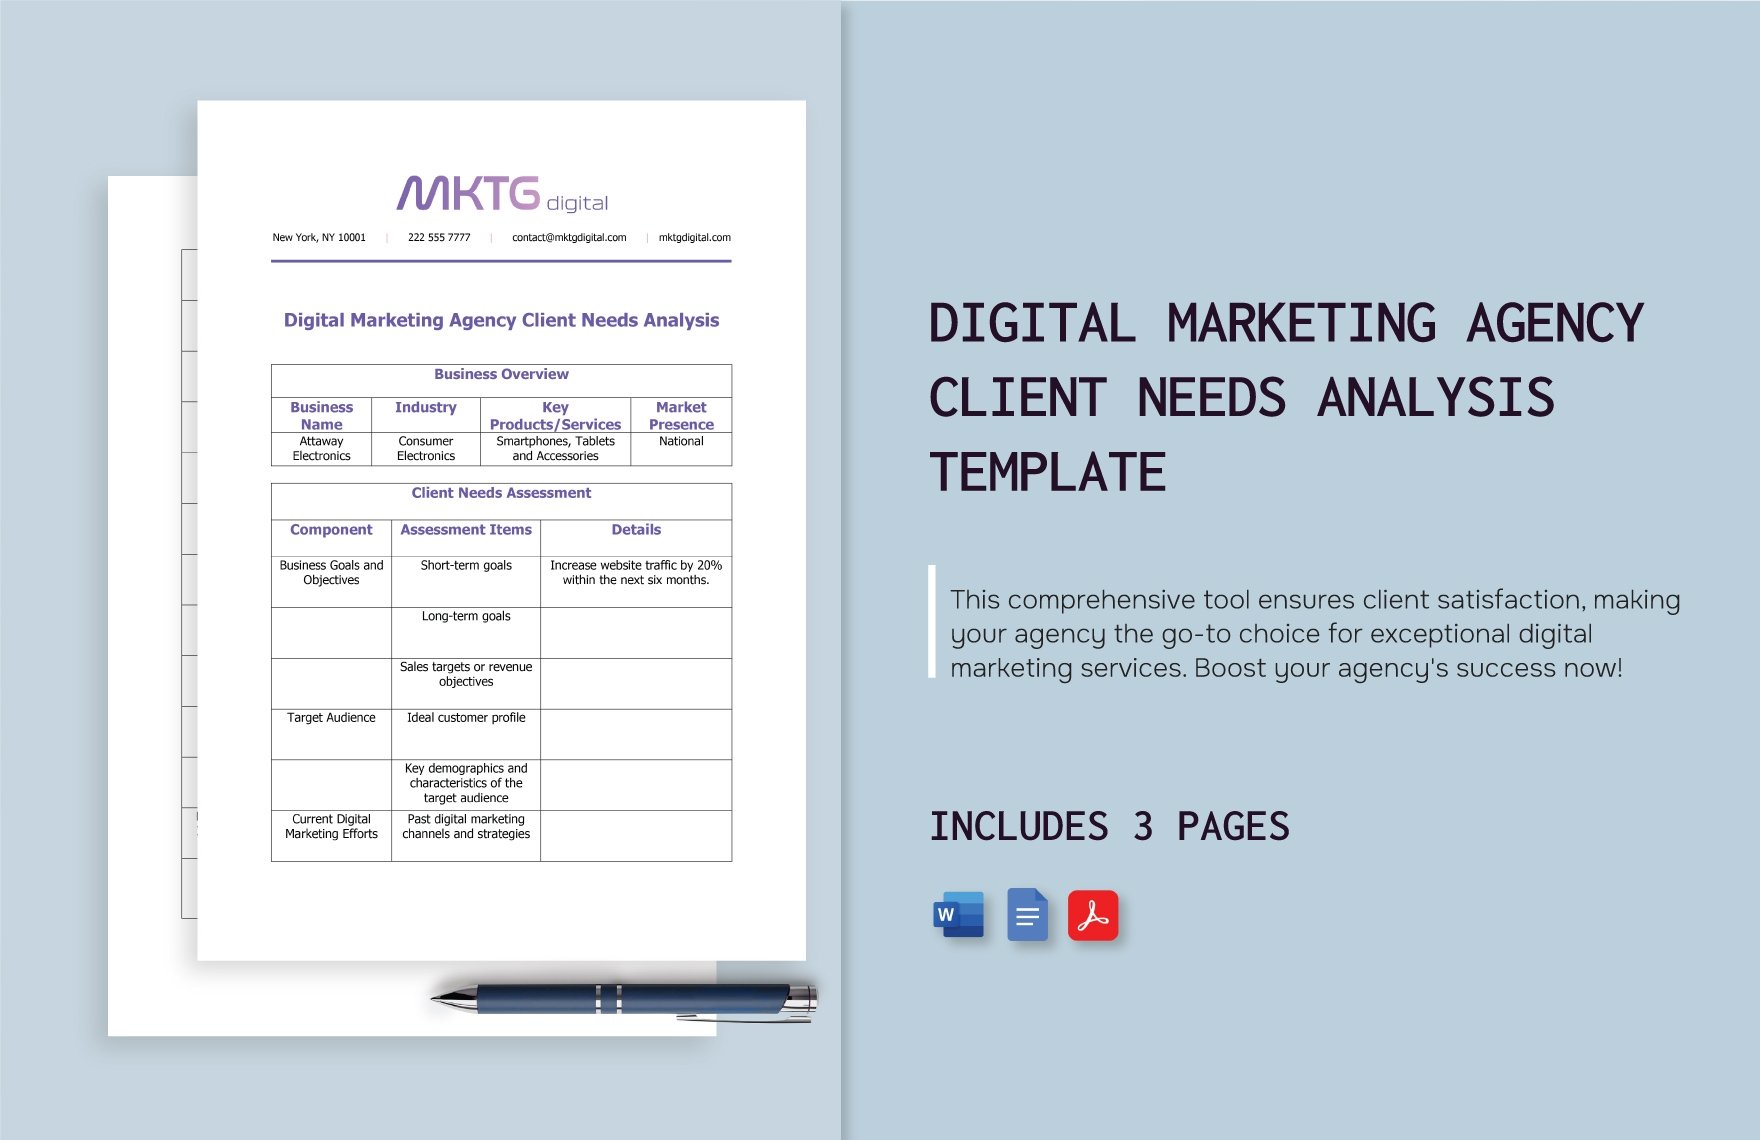 Digital Marketing Agency Client Needs Analysis Template